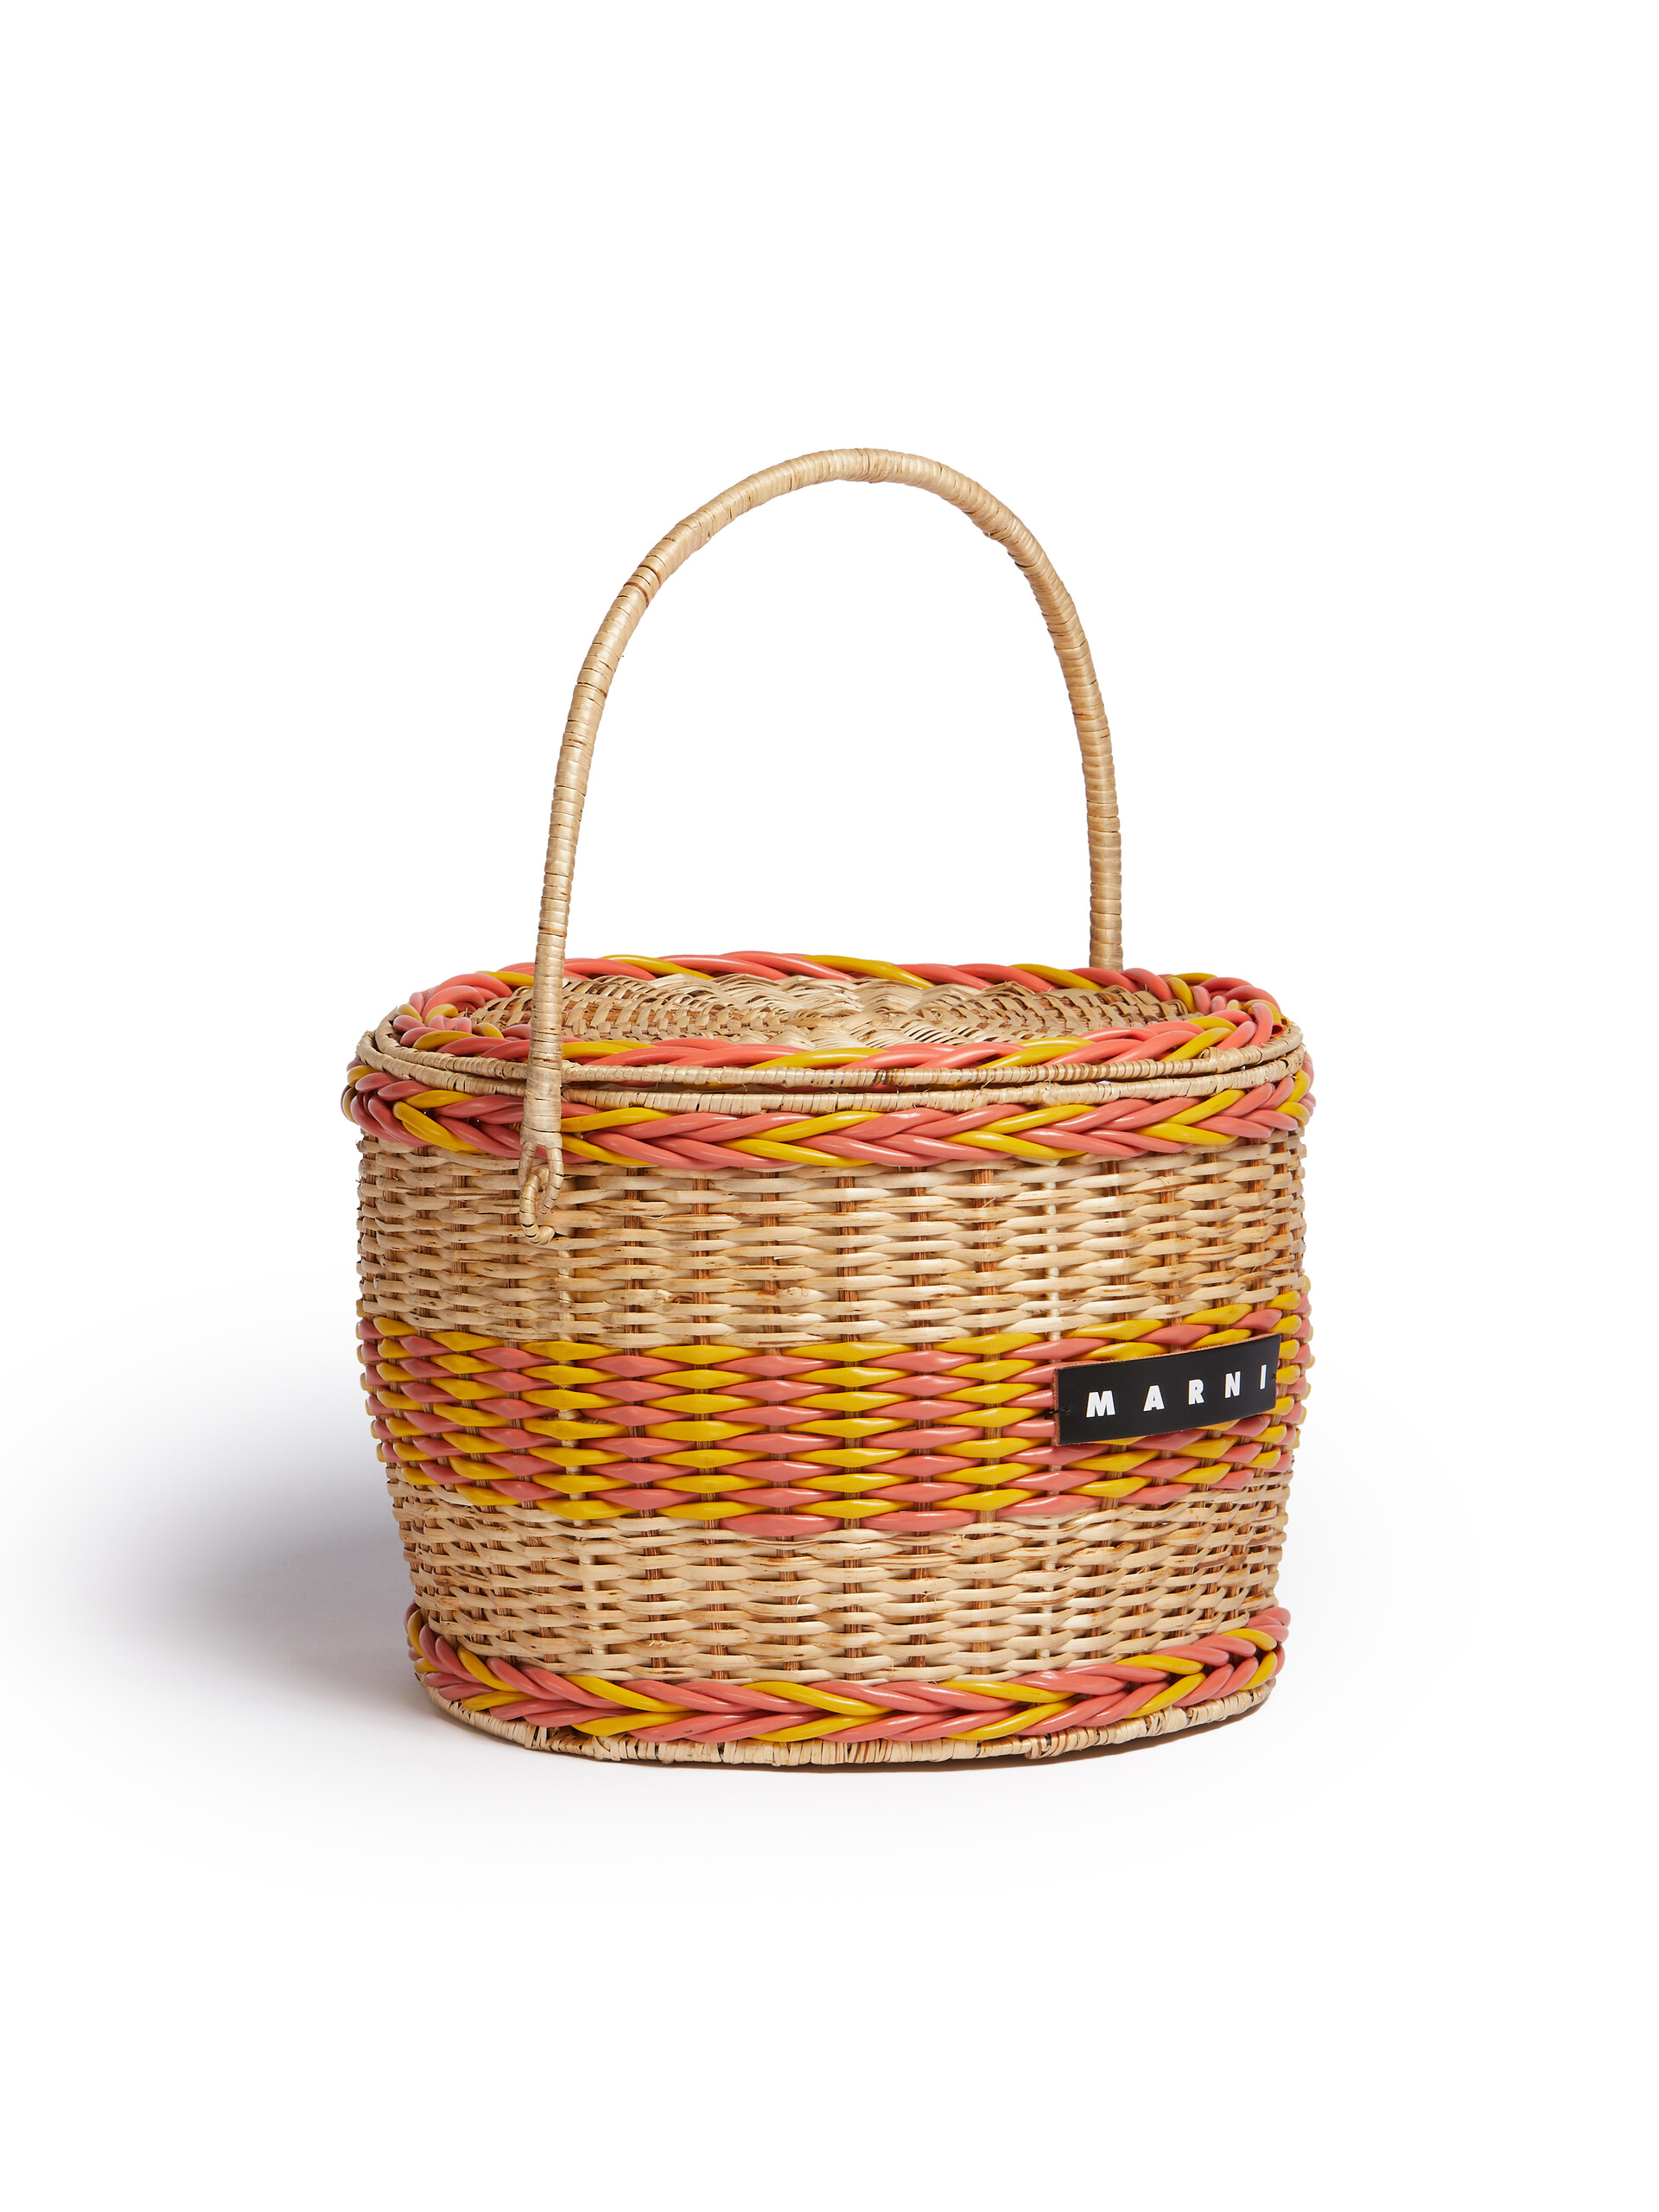 Orange natural fibre MARNI MARKET picnic basket - Accessories - Image 2